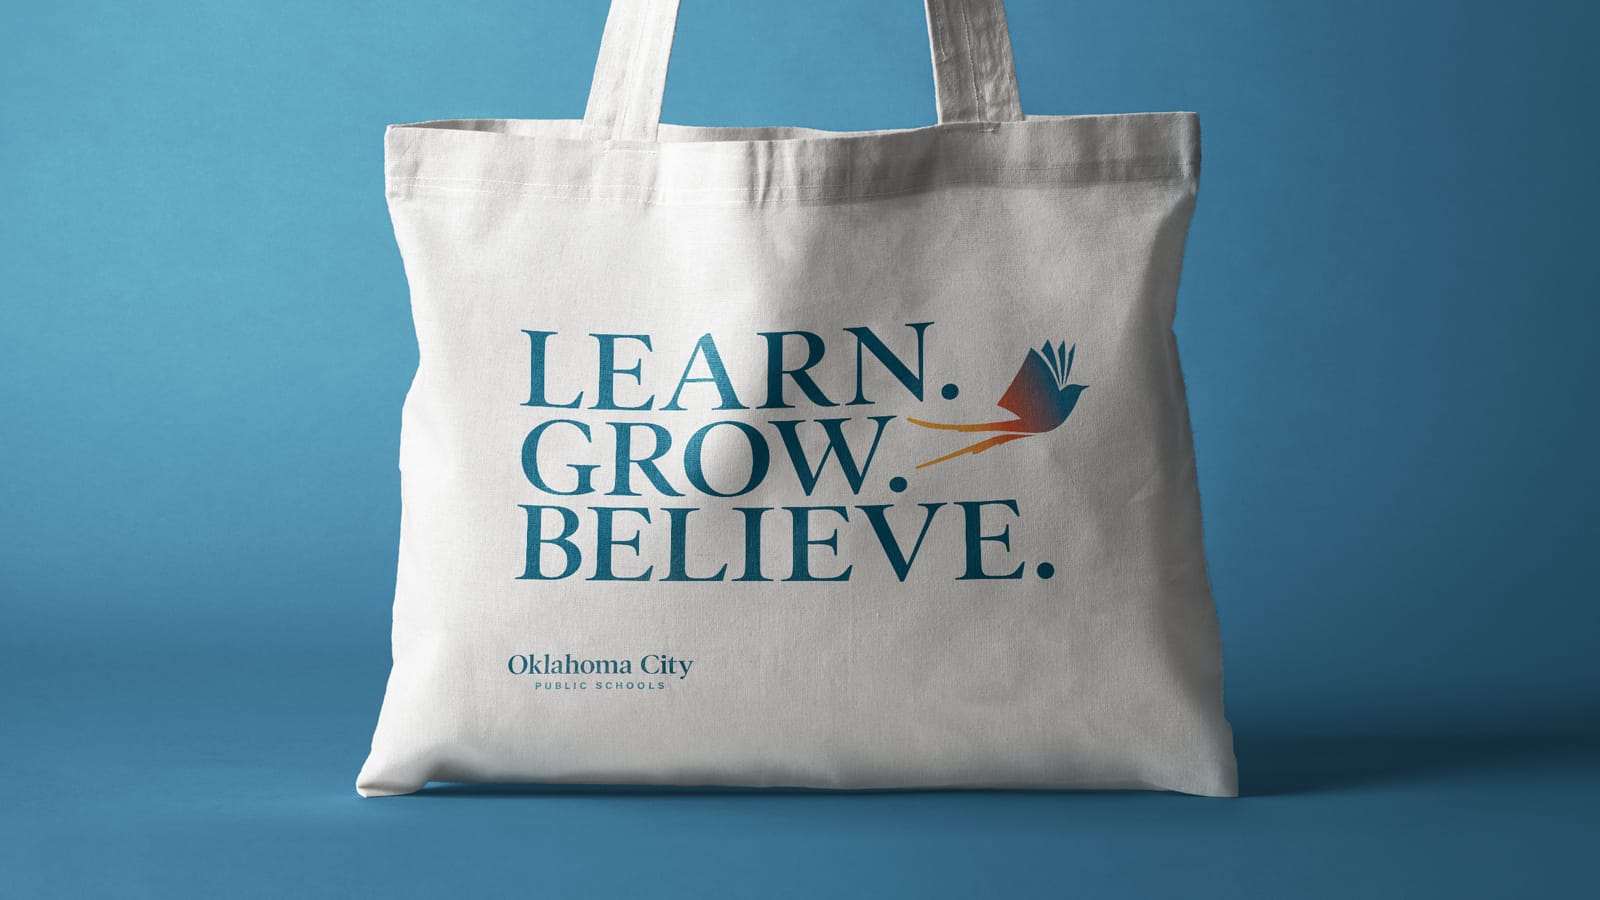 Oklahoma City Public Schools new brand tote bag design